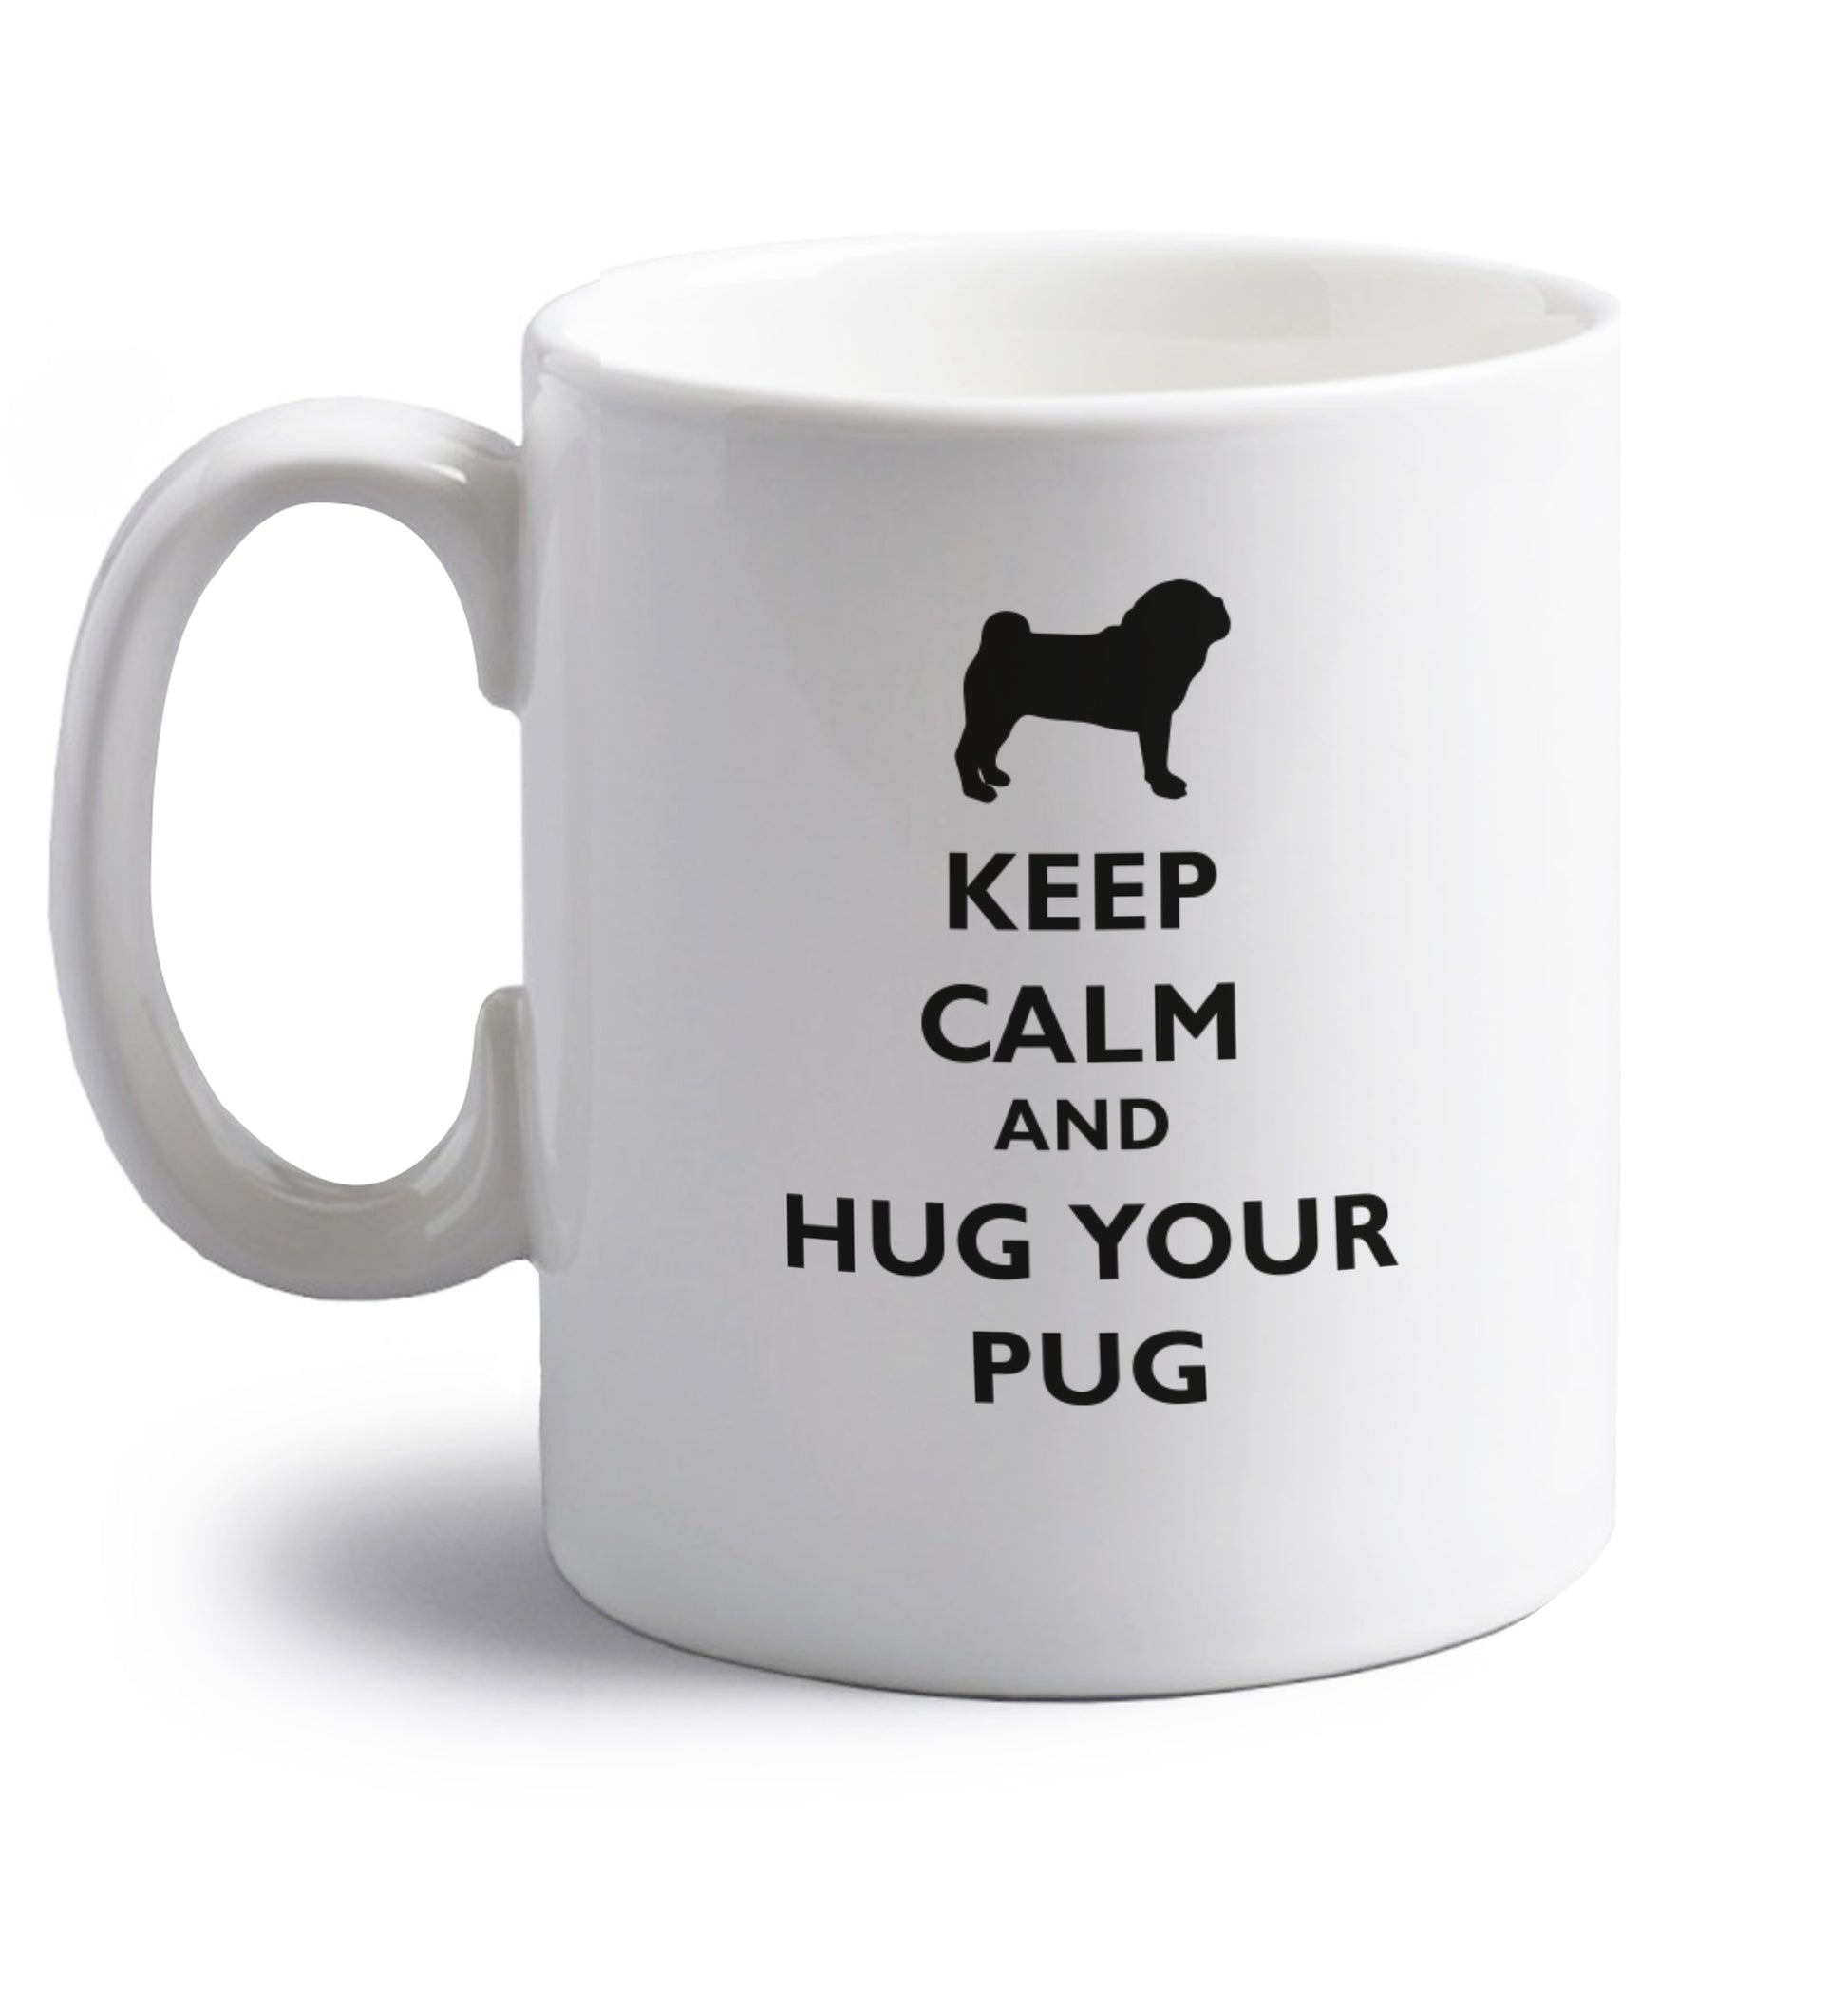 Keep calm and hug your pug right handed white ceramic mug 